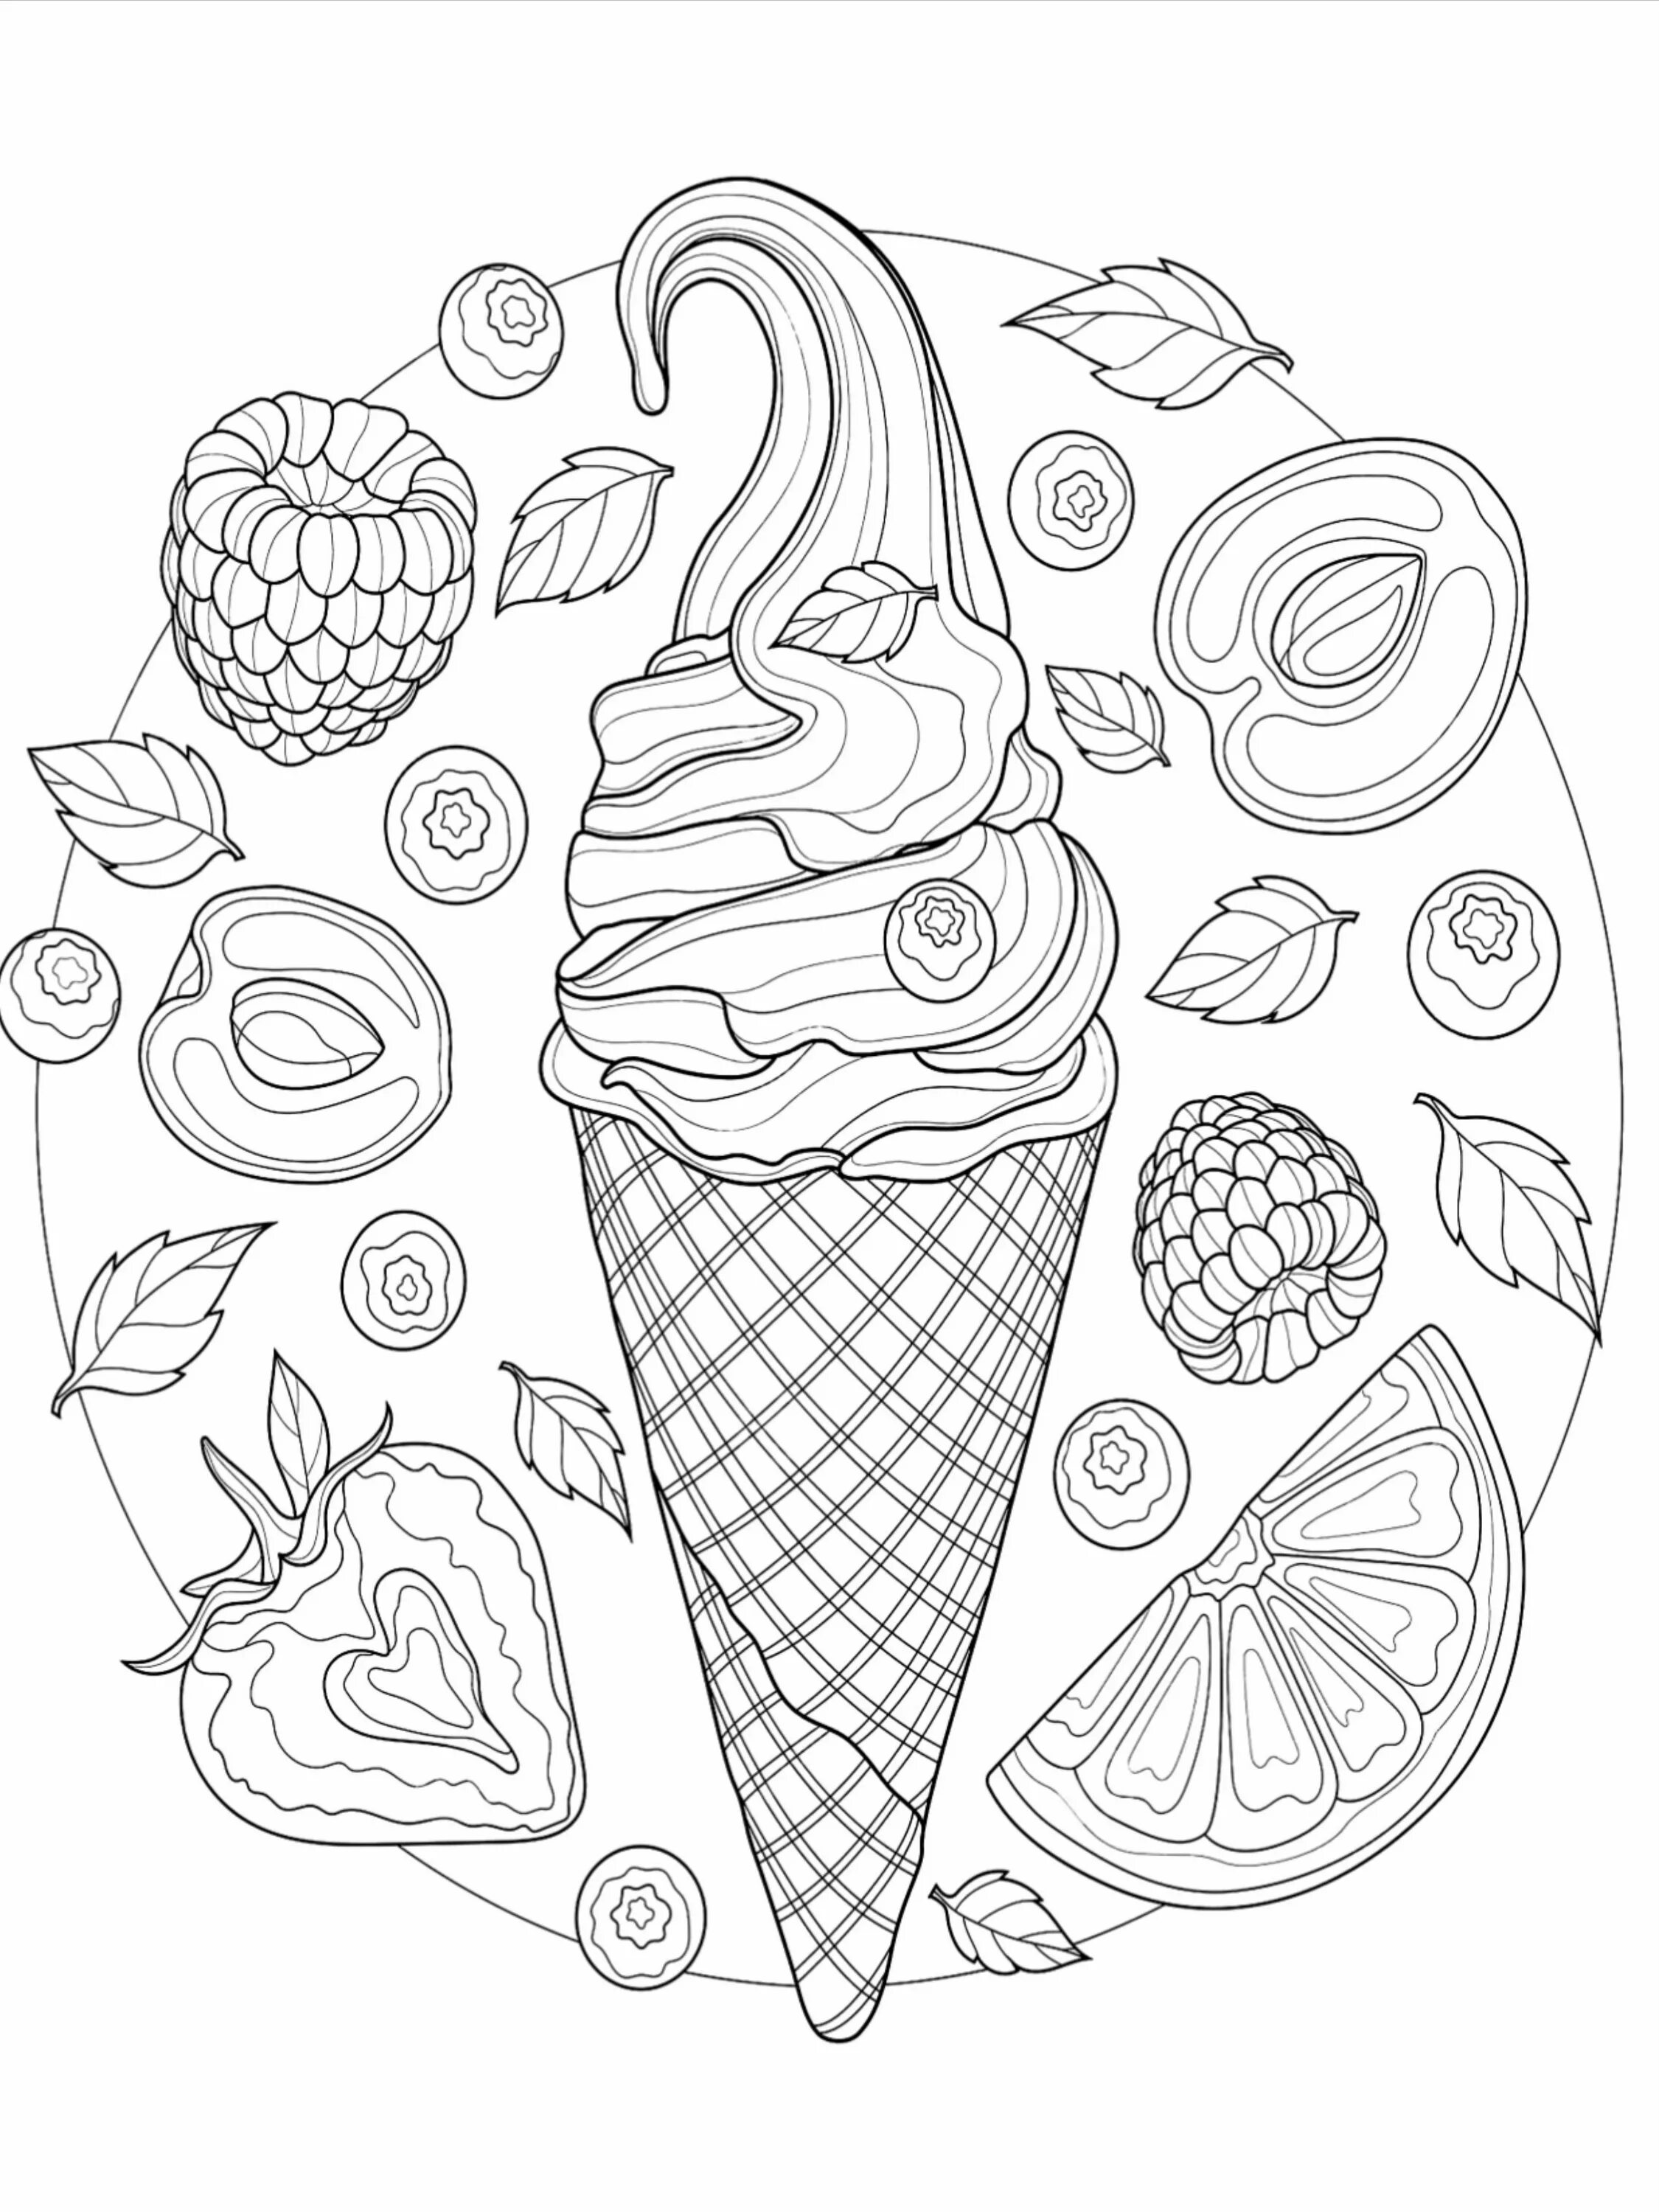 Inspirational anti-stress ice cream coloring book